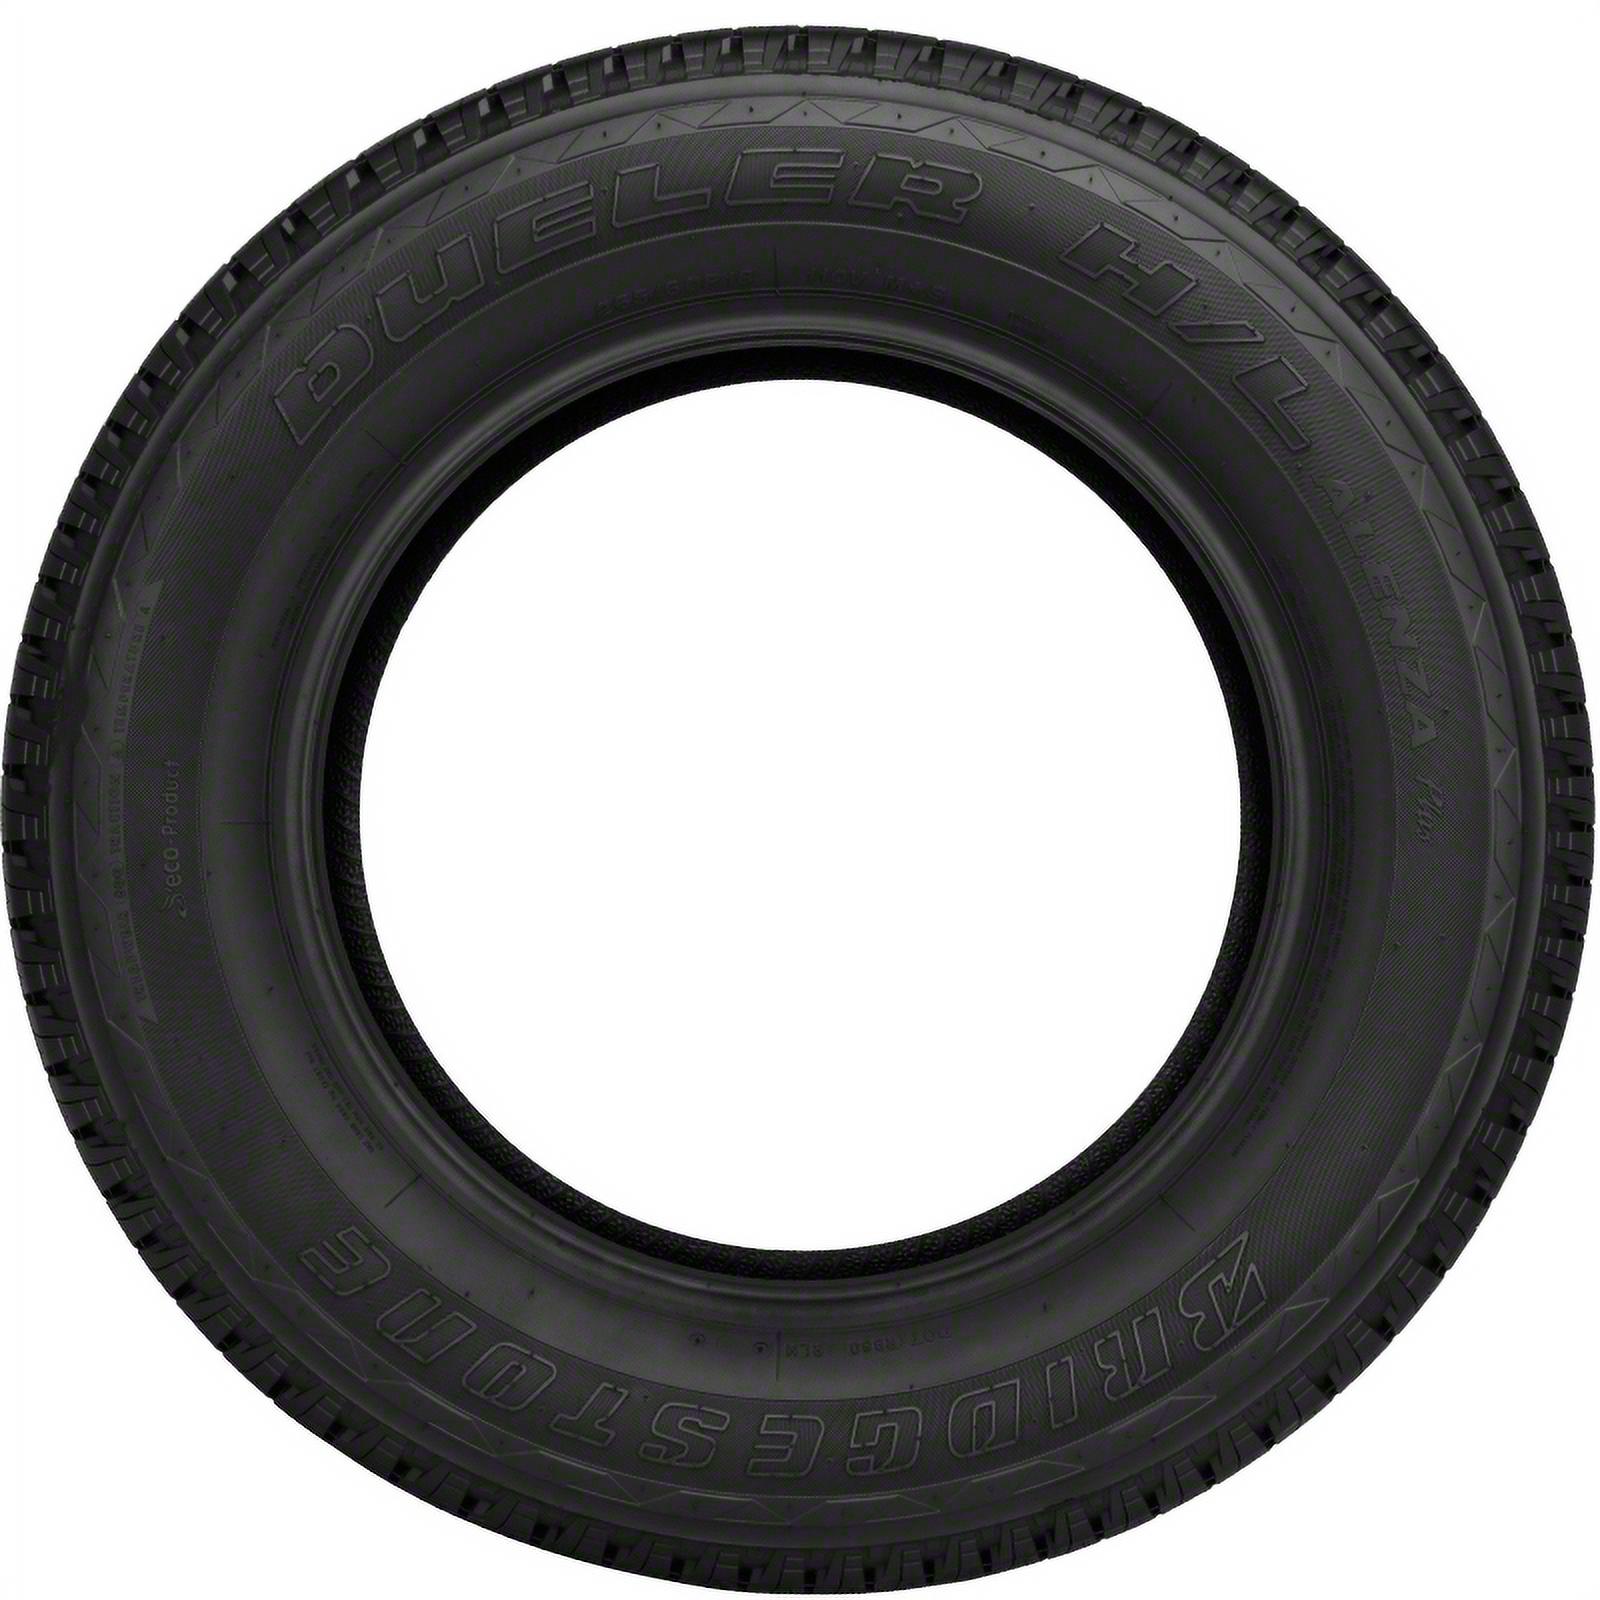 Bridgestone Dueler H/L Alenza Plus All Season P275/55R20 111H SUV/Crossover Tire - image 1 of 4